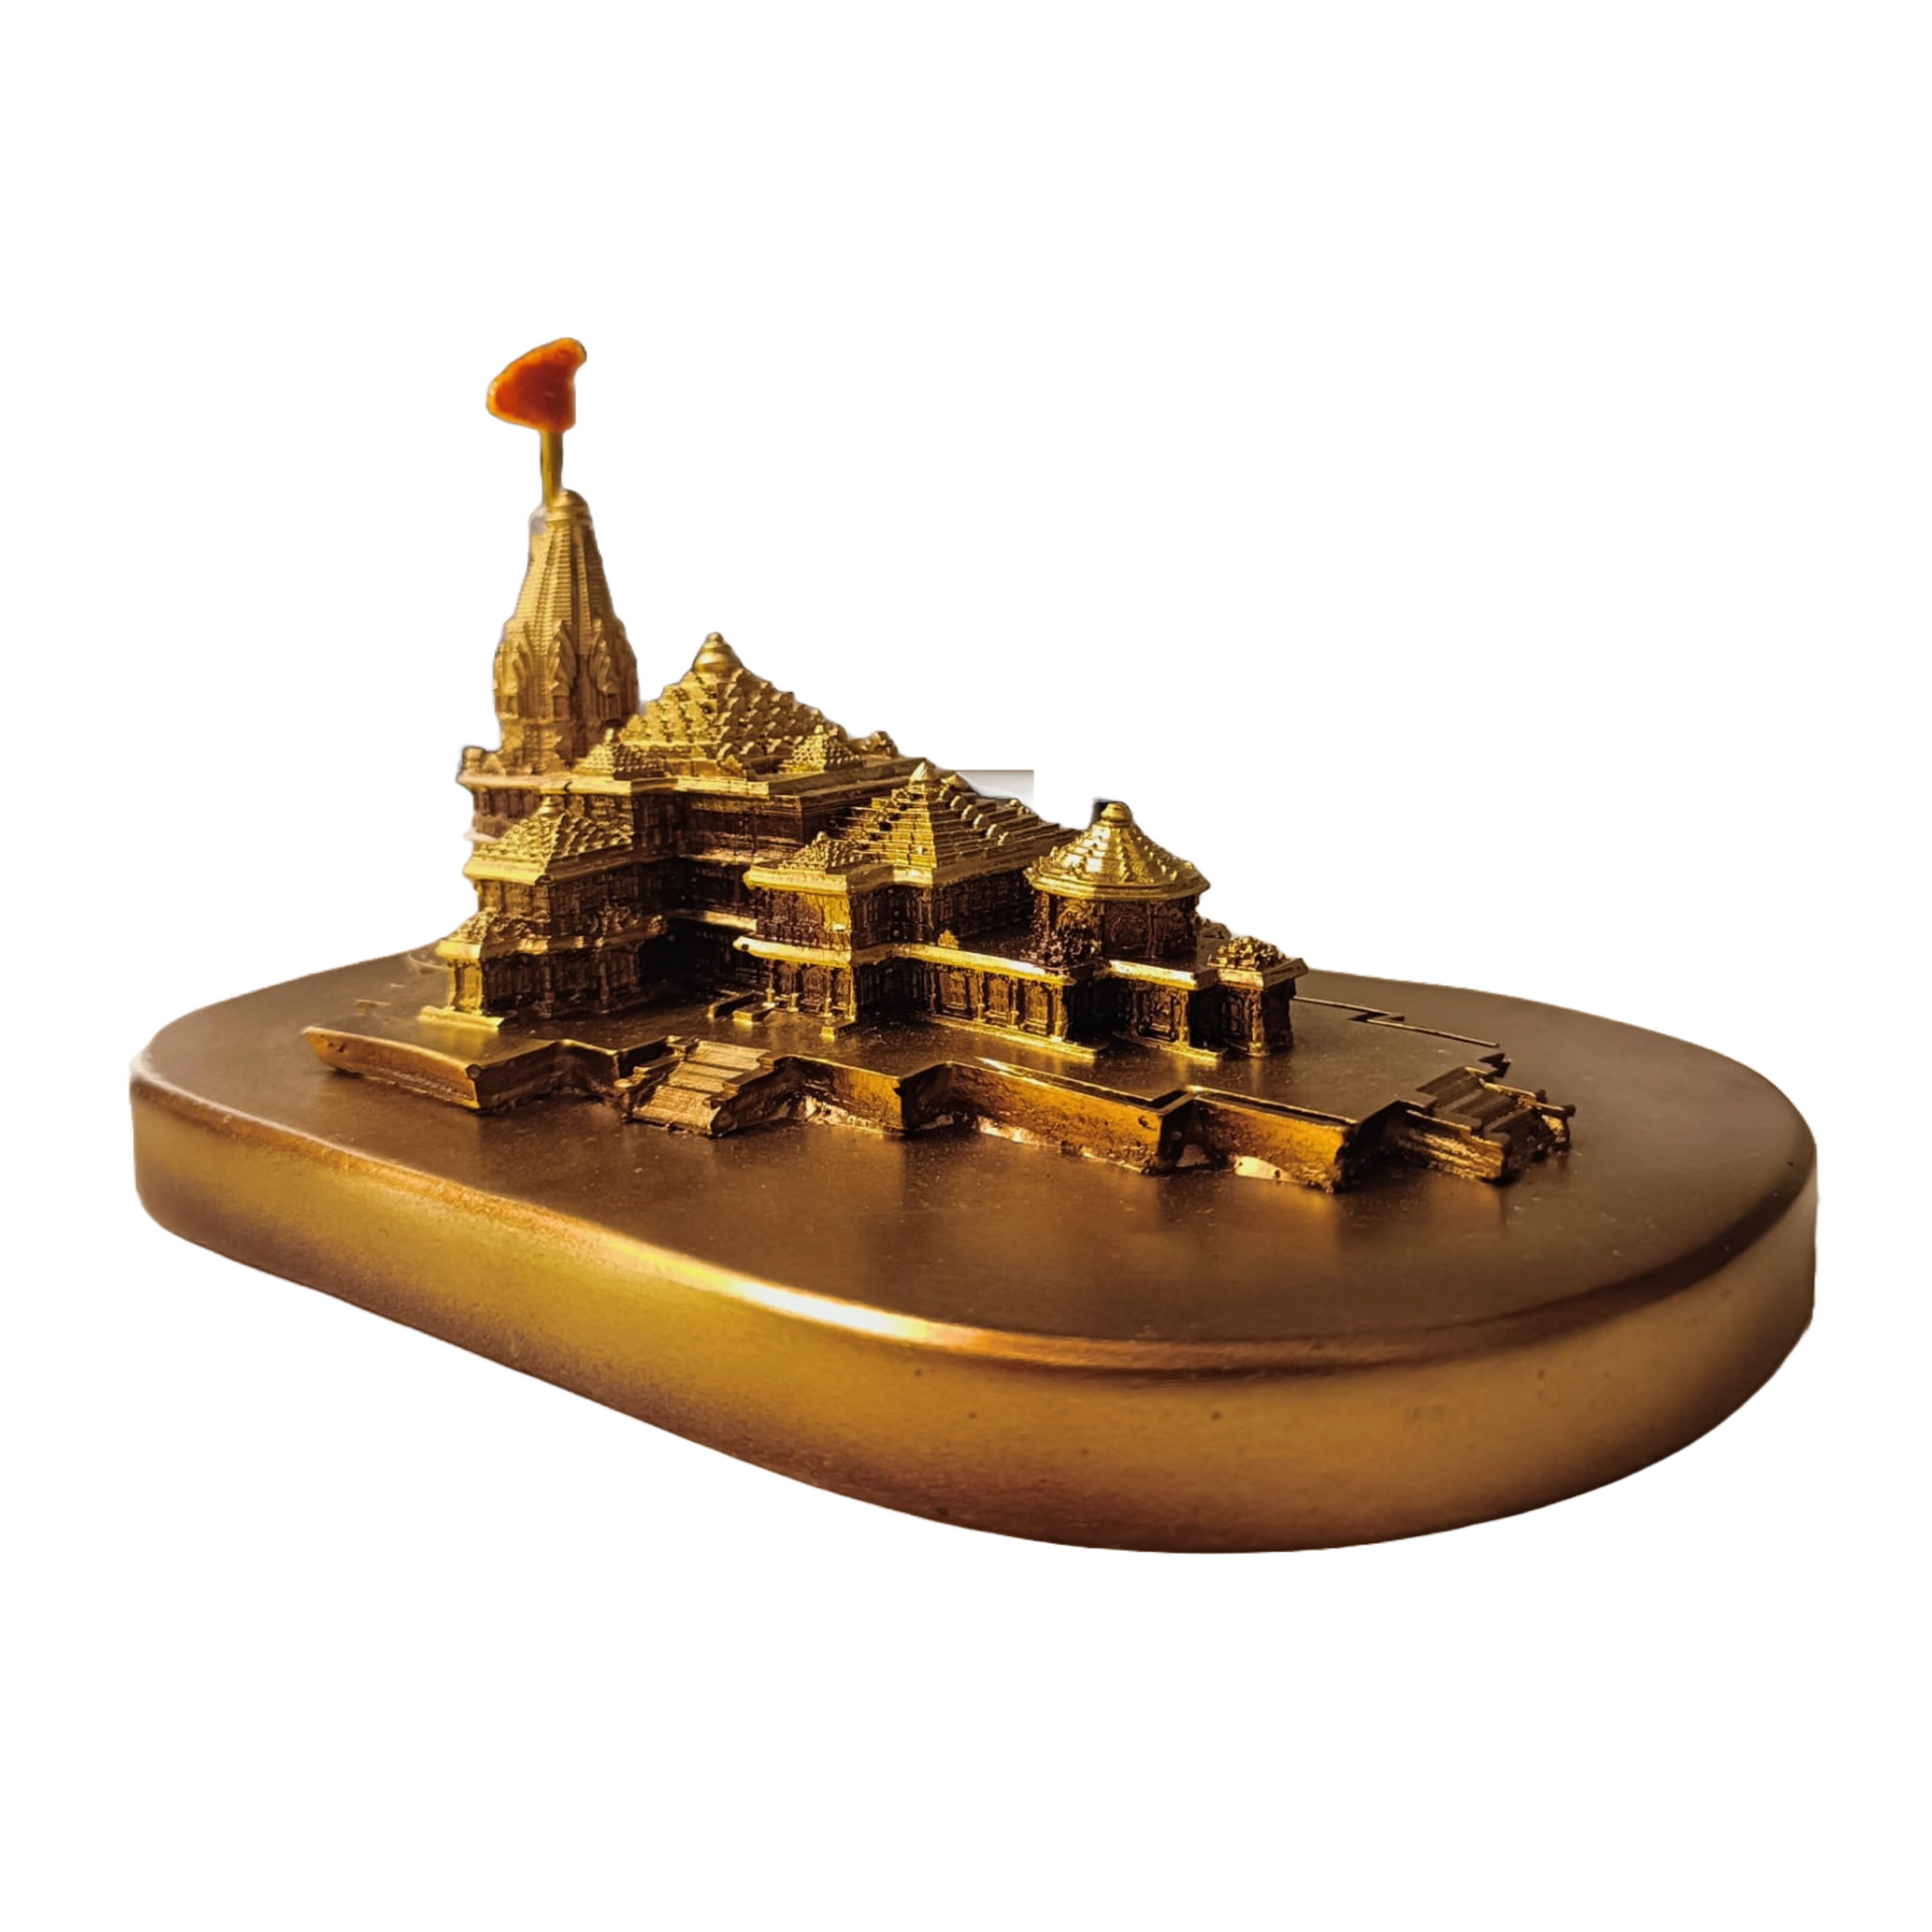 ALiLA Shri Ram Mandir Golden Ayodhya Model for Home Temple Pooja Decoration & Gifts, (LxWxH 6x5x3)